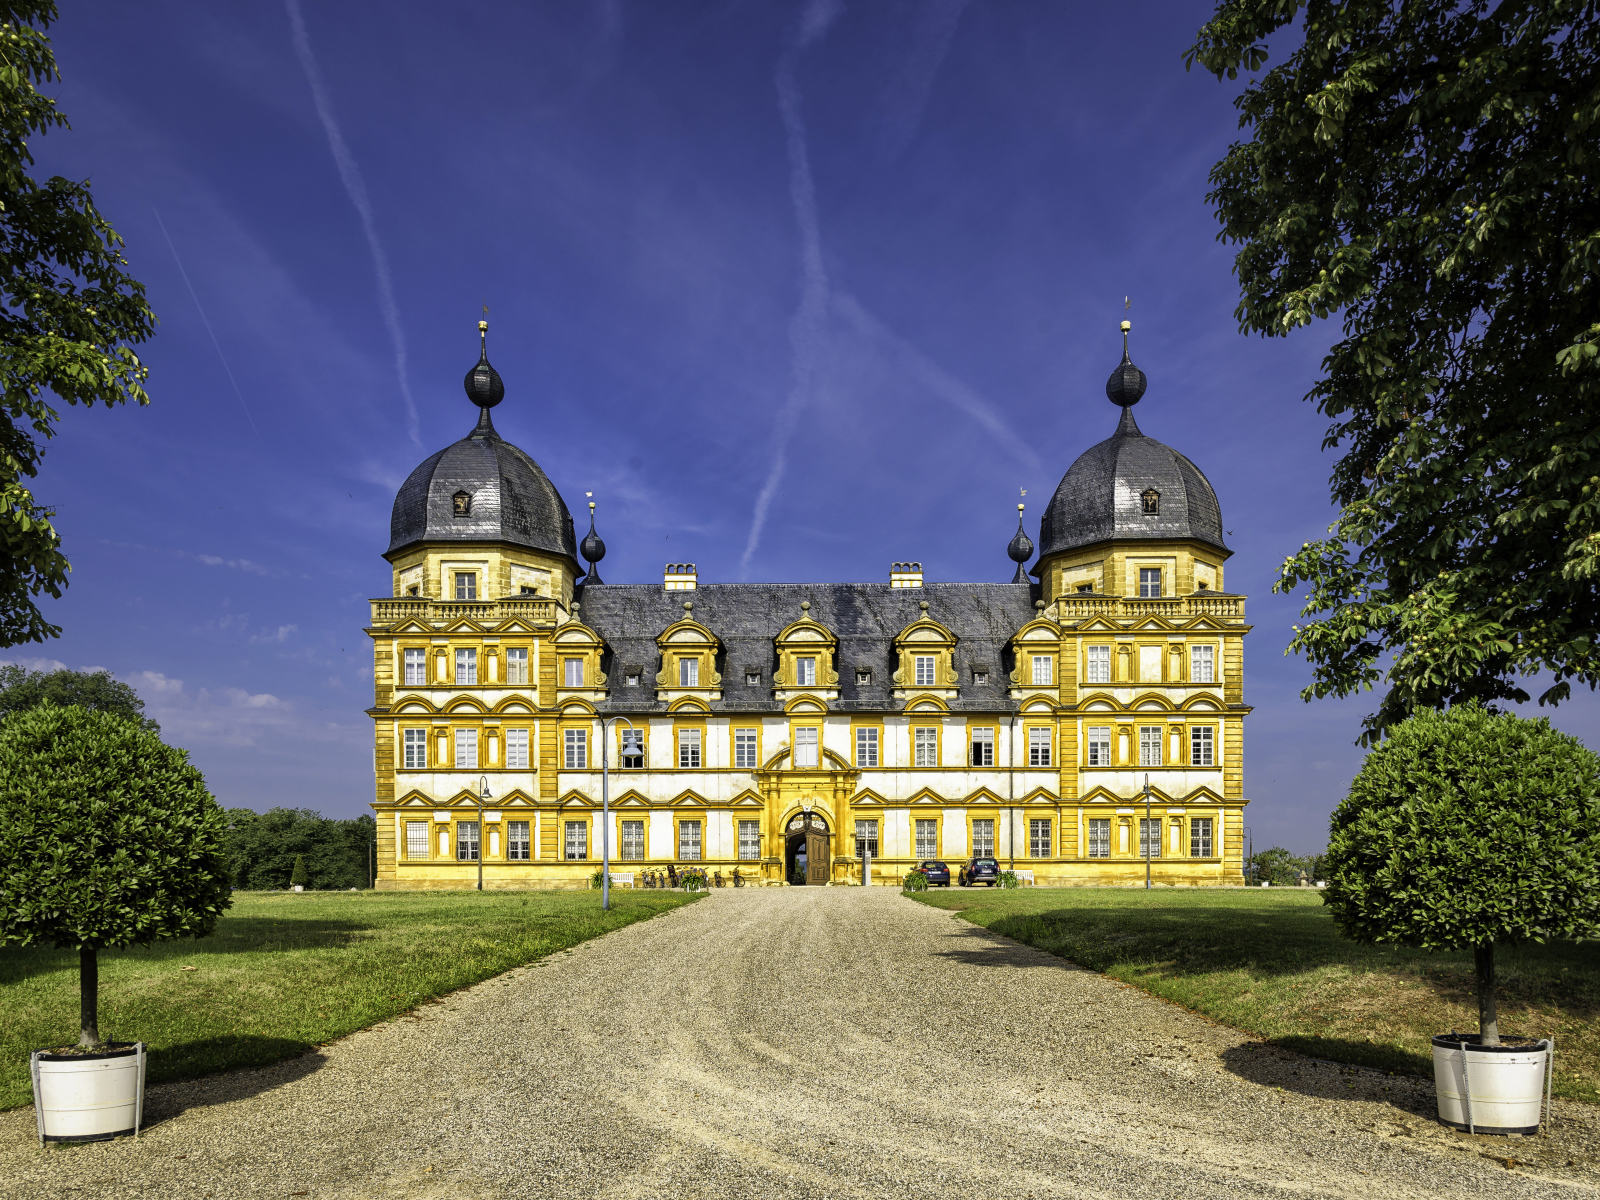 Schloss Seehof Castle under a beautiful blue sky, Germany